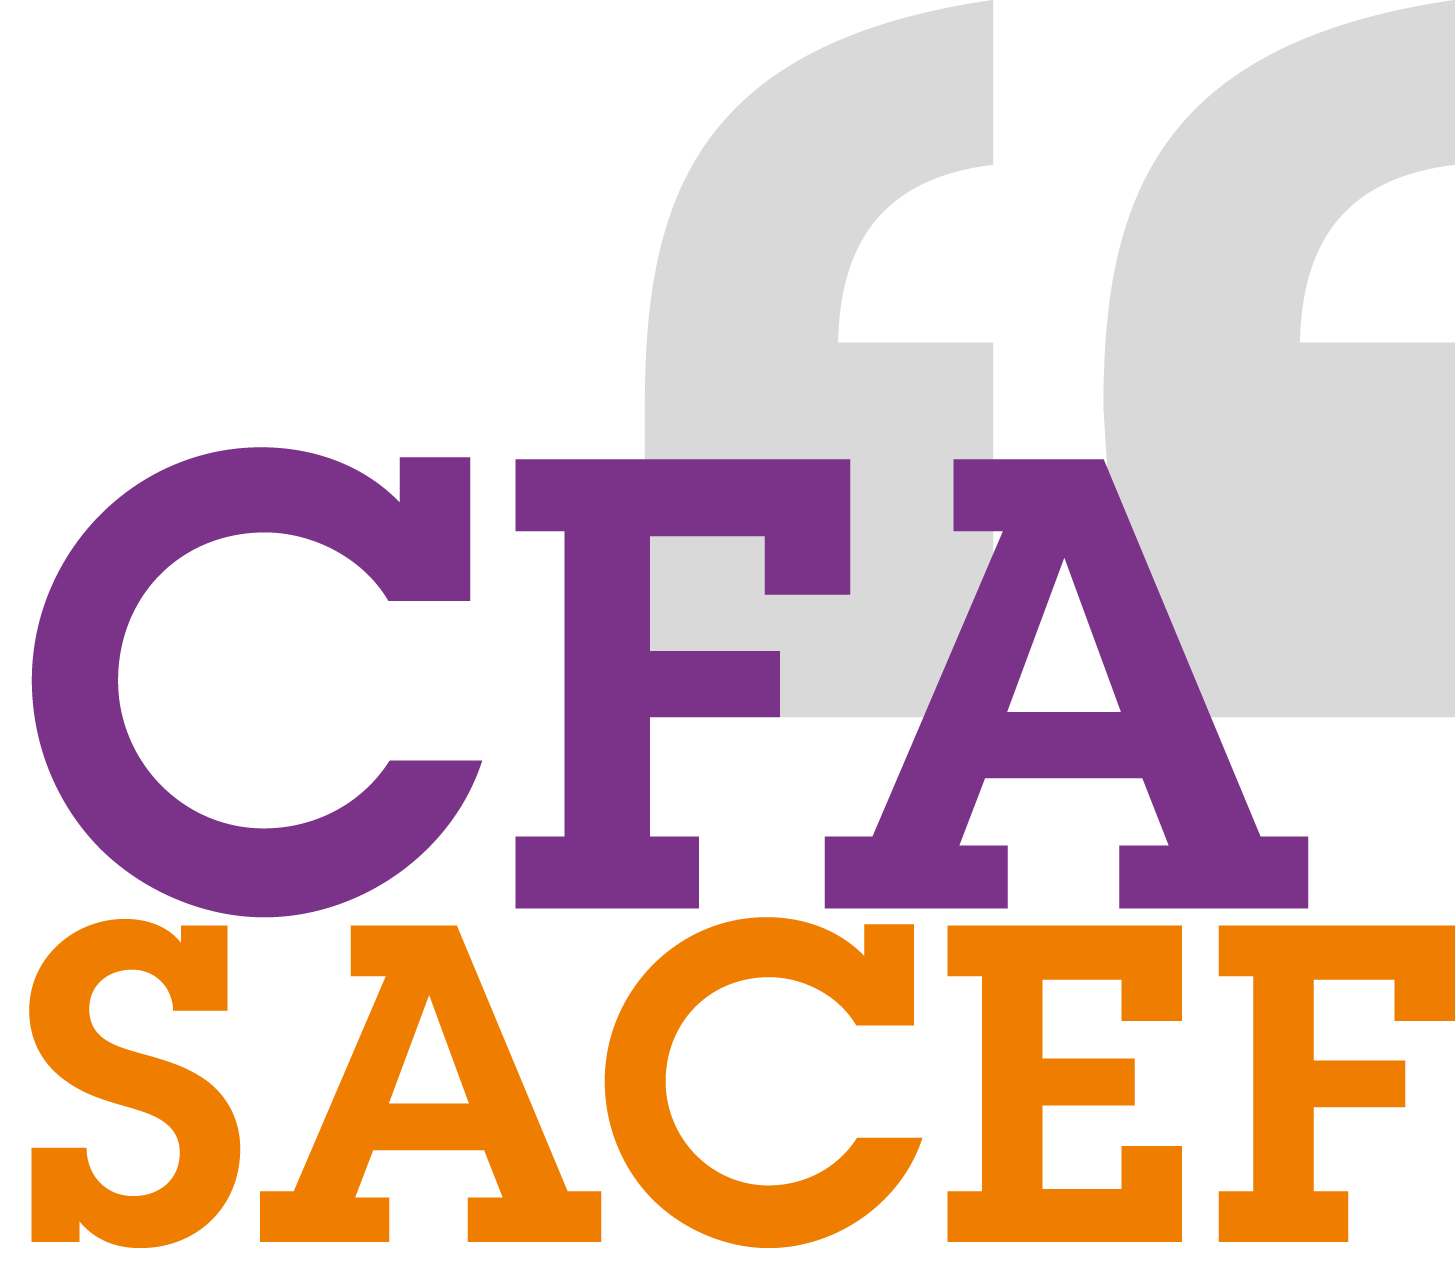 CFA-SACEF - Combomedia